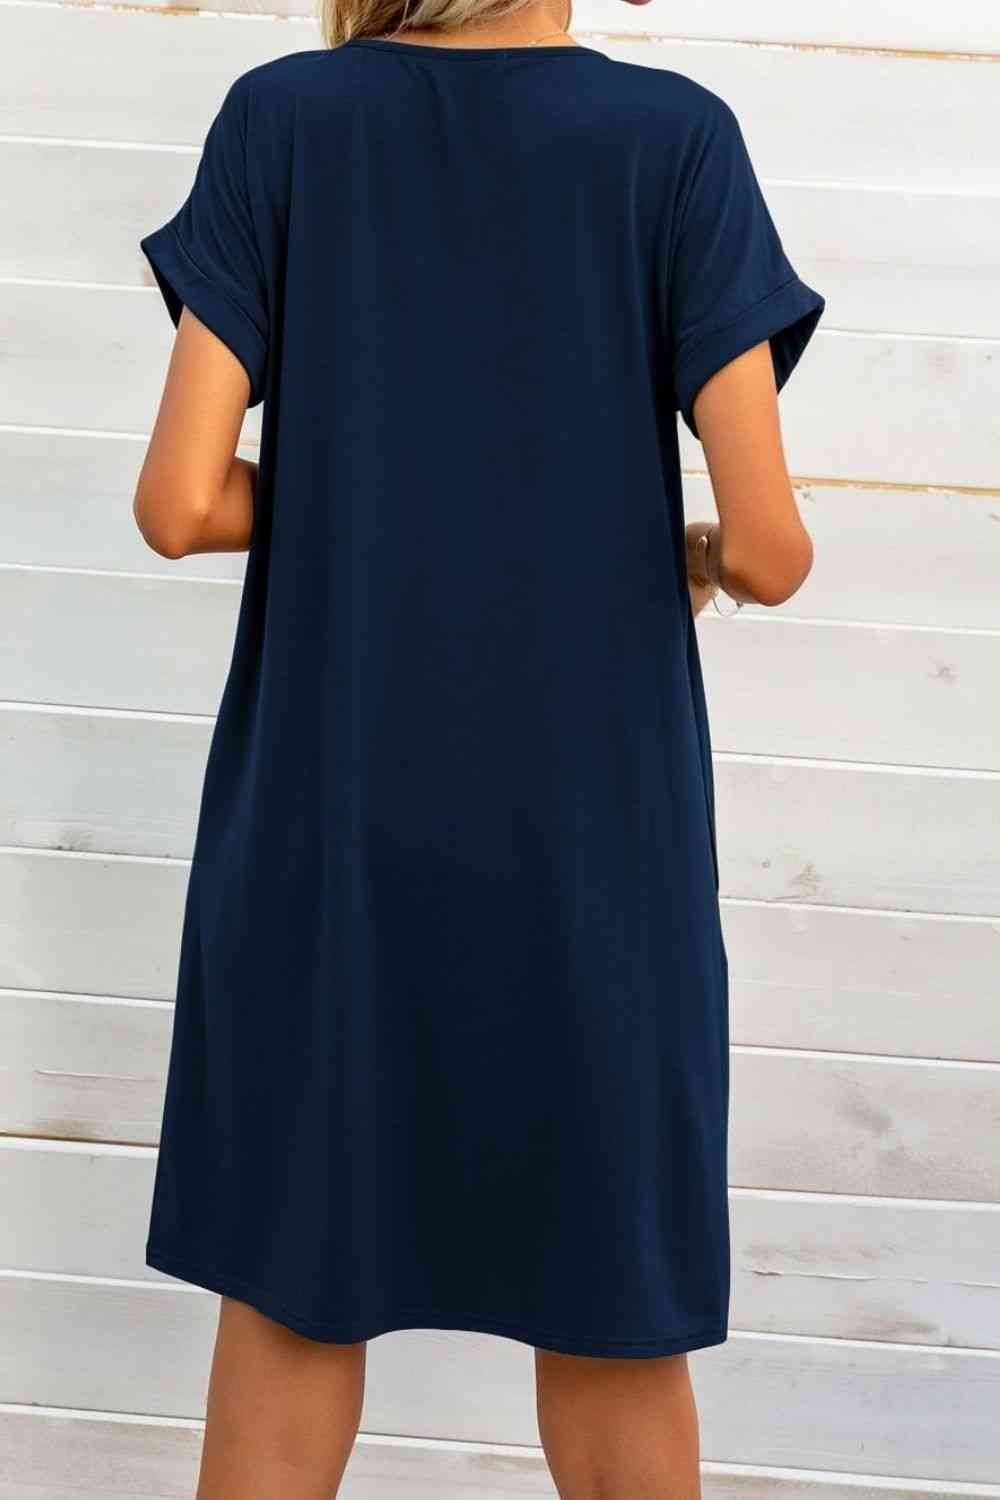 Short Sleeve Pocket Dress | Navy